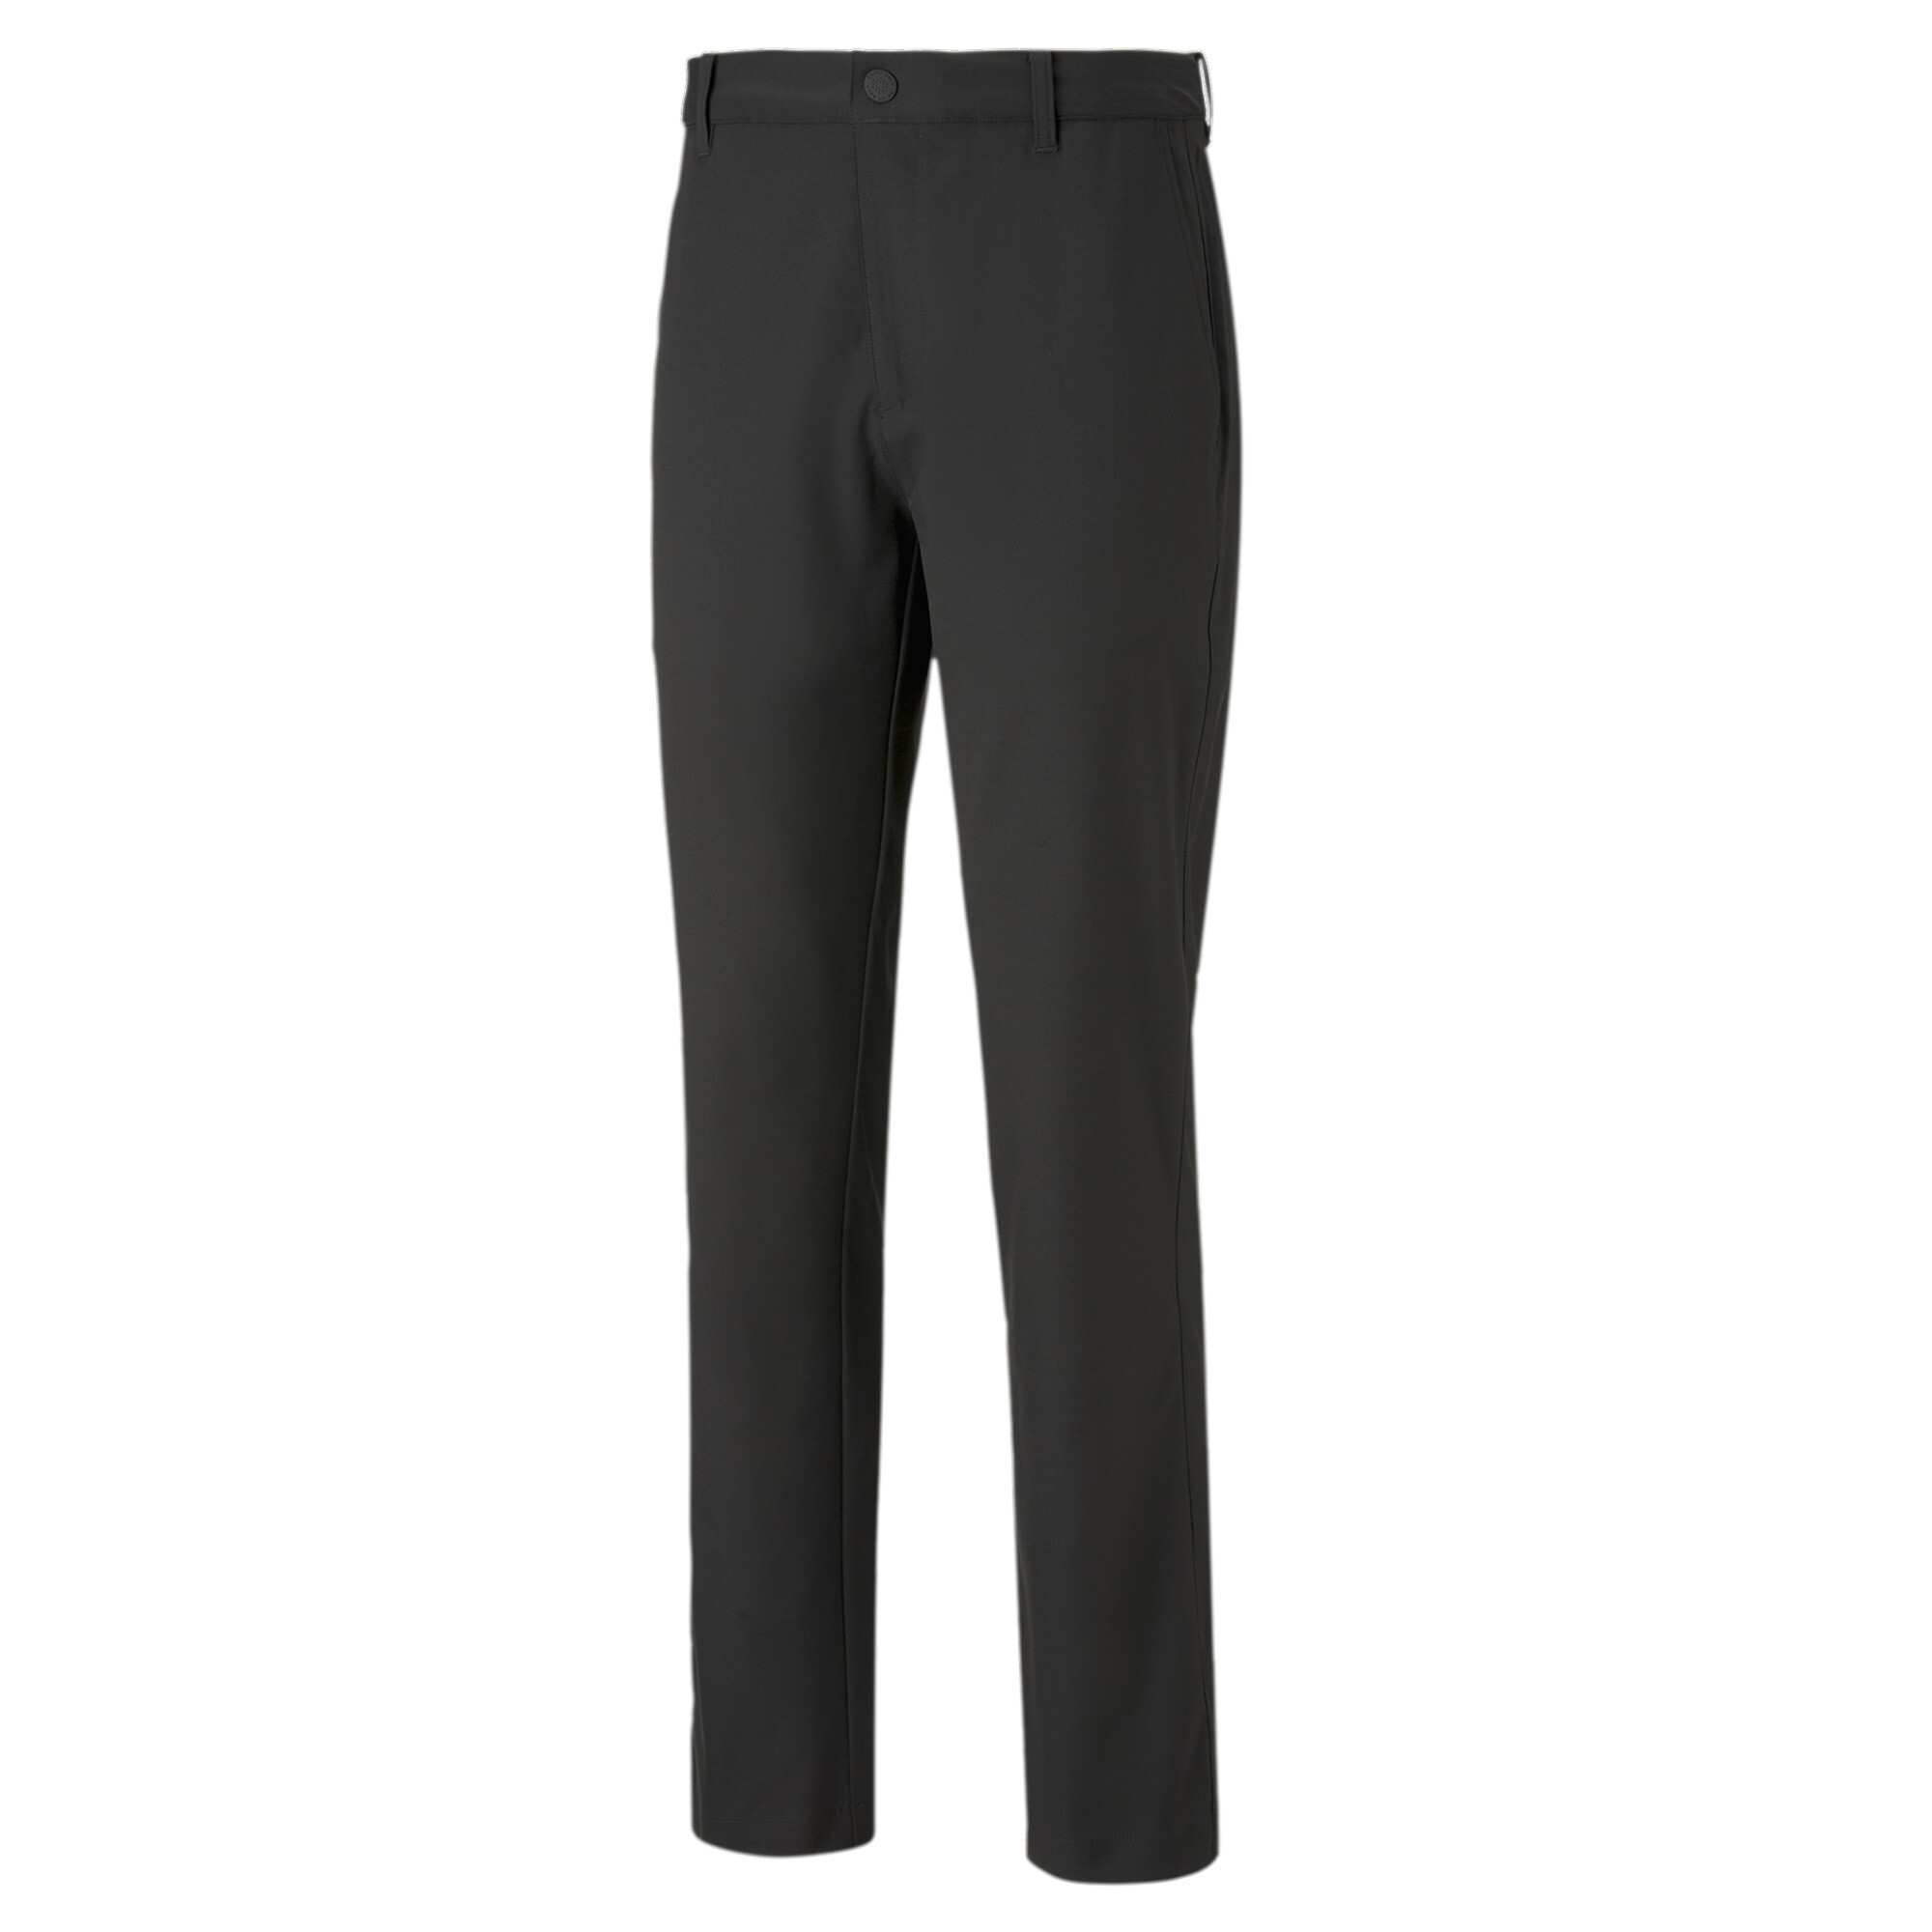 Men's Puma Dealer Golf Pants, Black, Size 28/32, Clothing